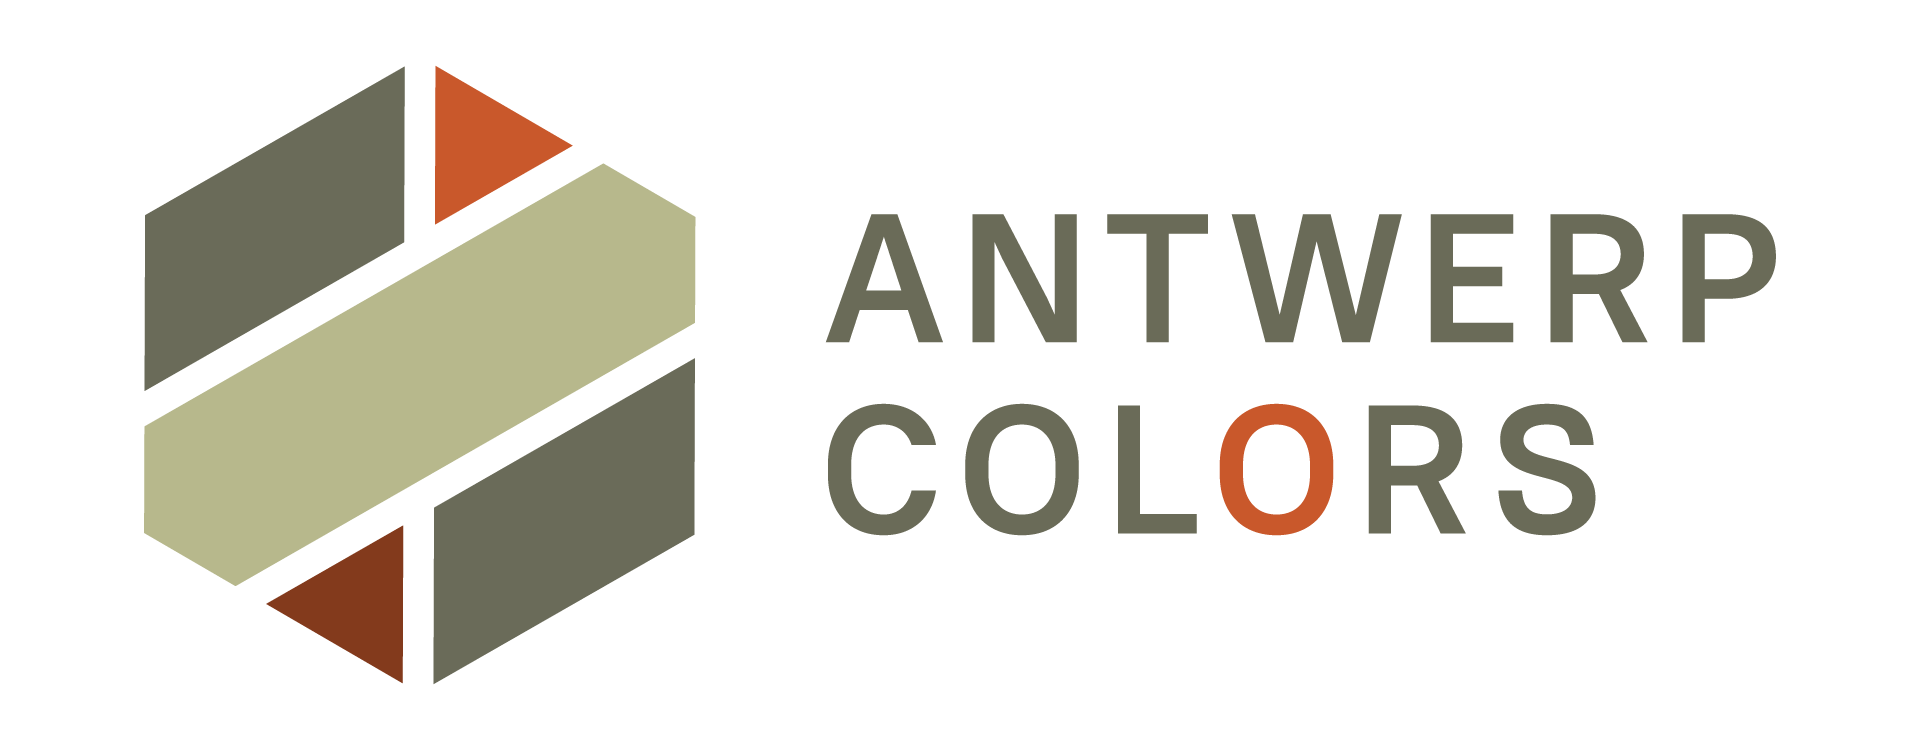 Antwerp Colors